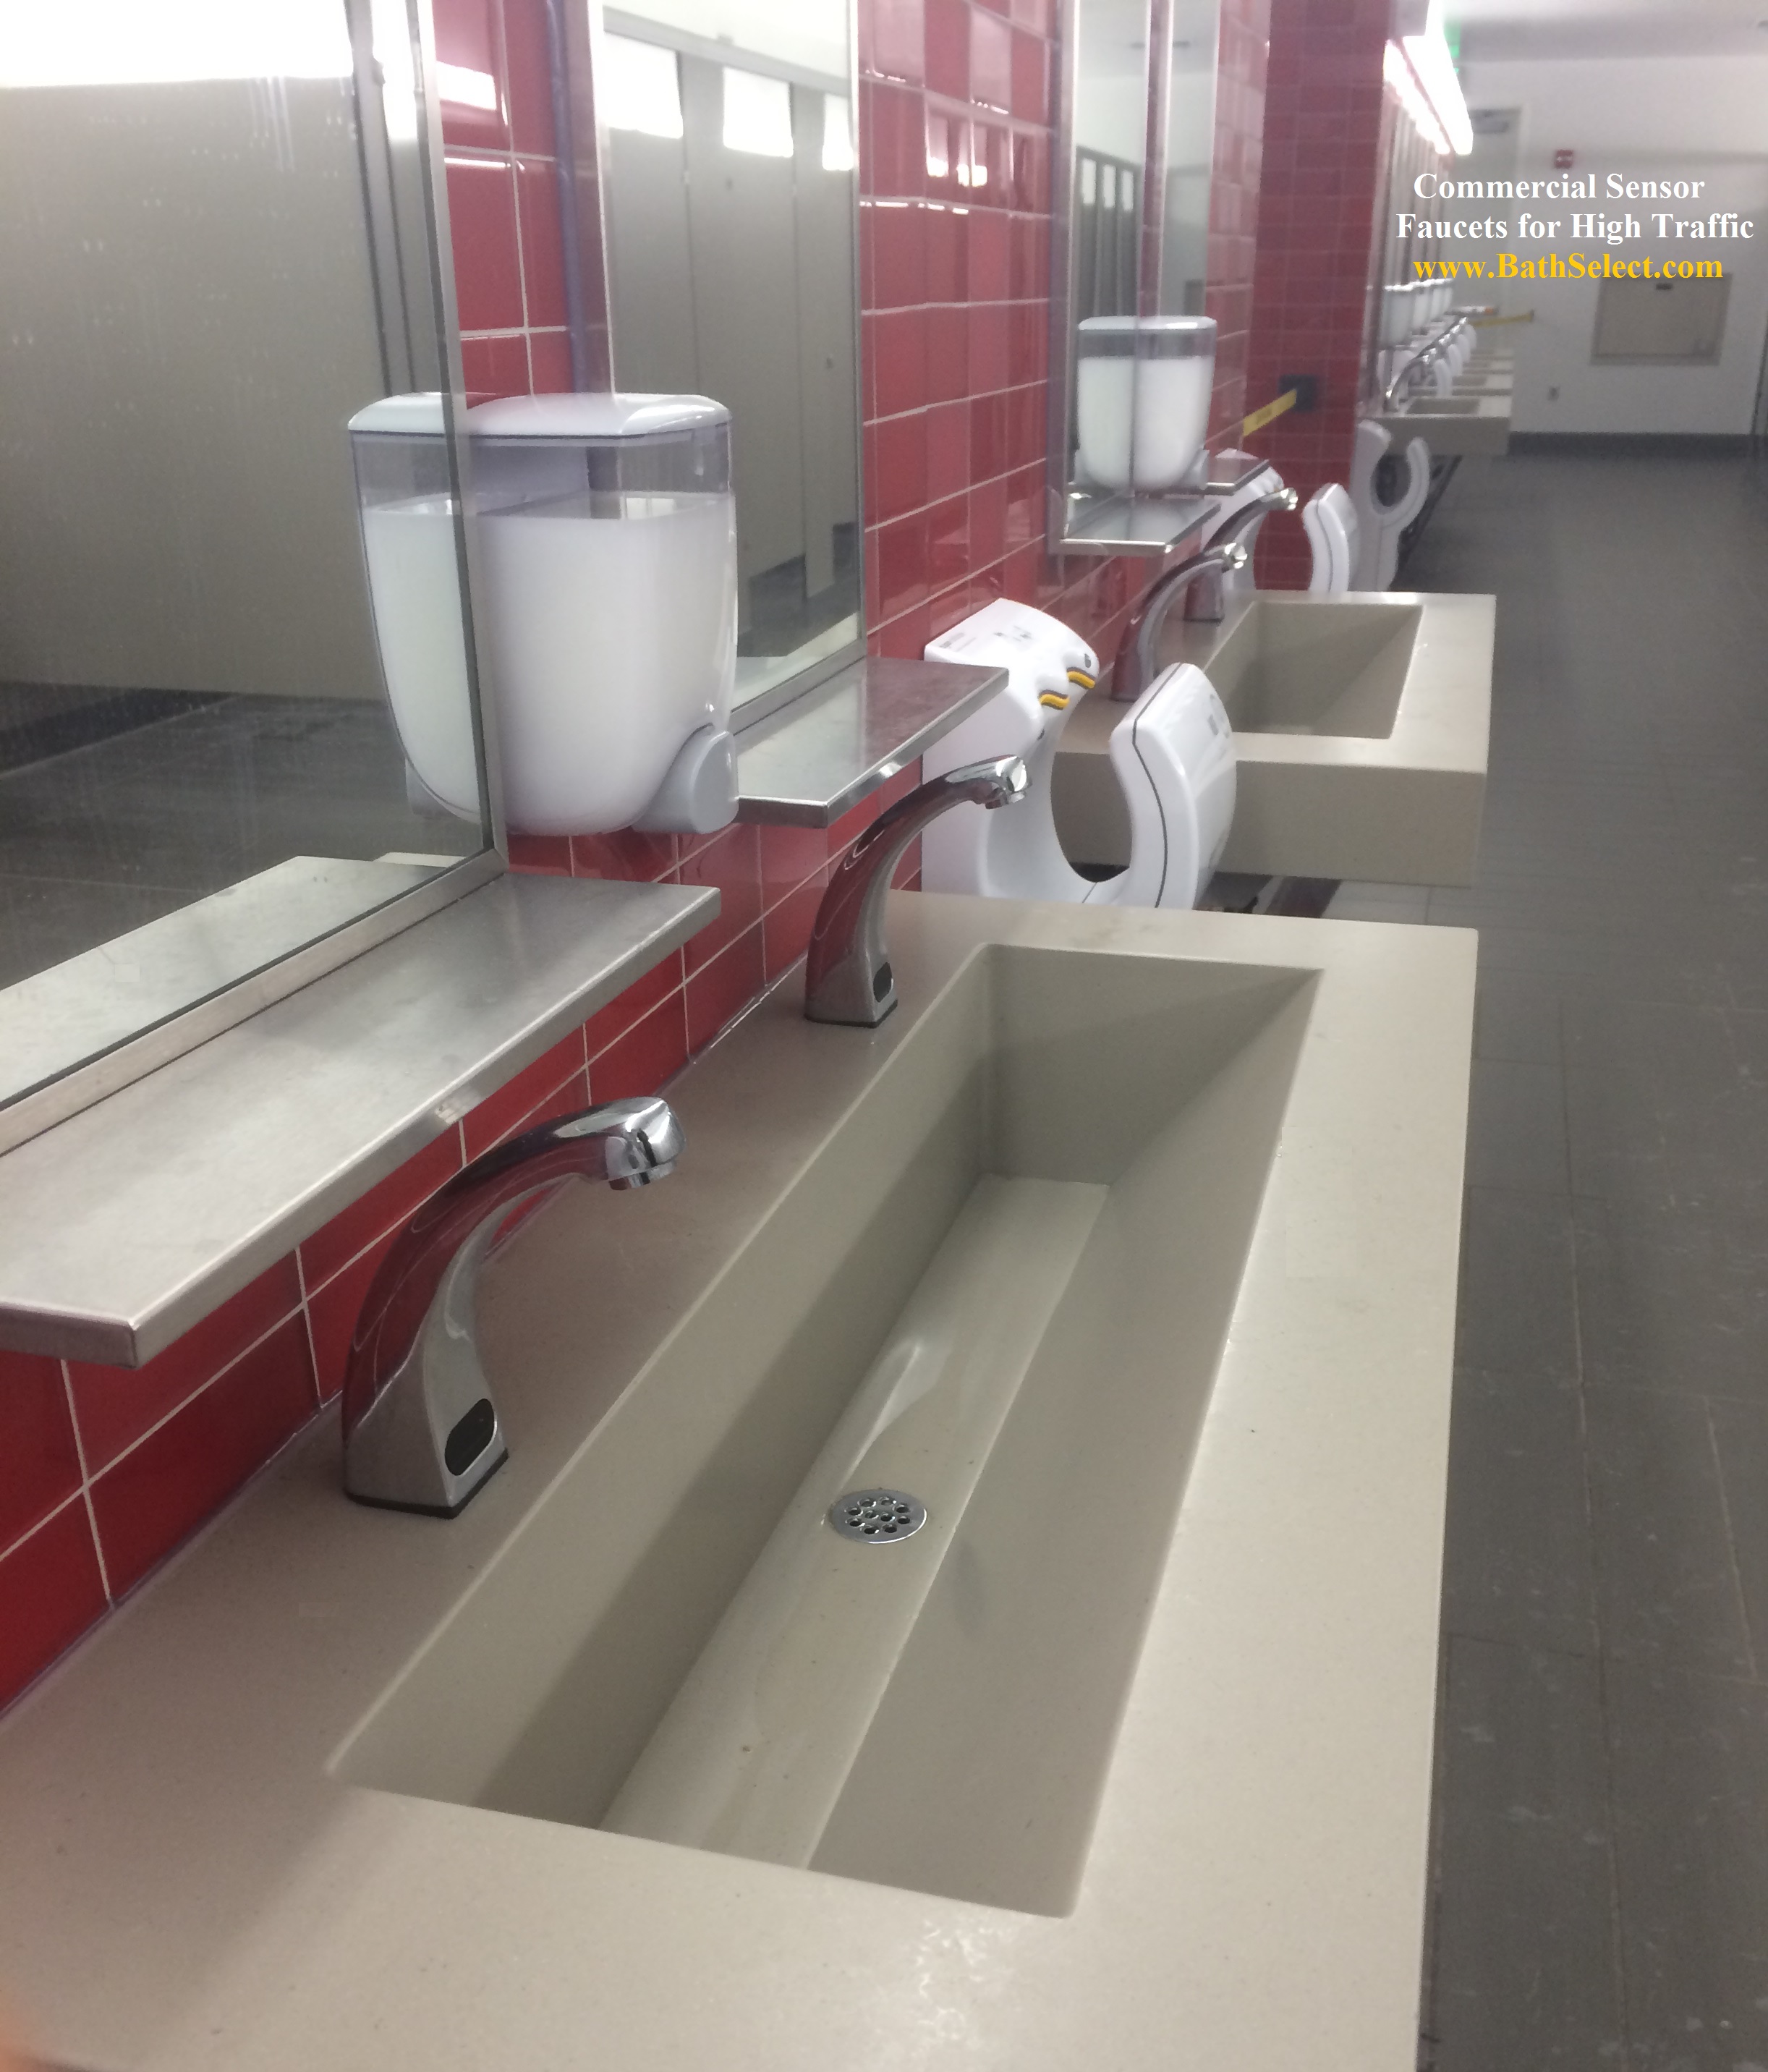 Specifications-Hands-Free-Sensor-Faucets-Public-Restrooms